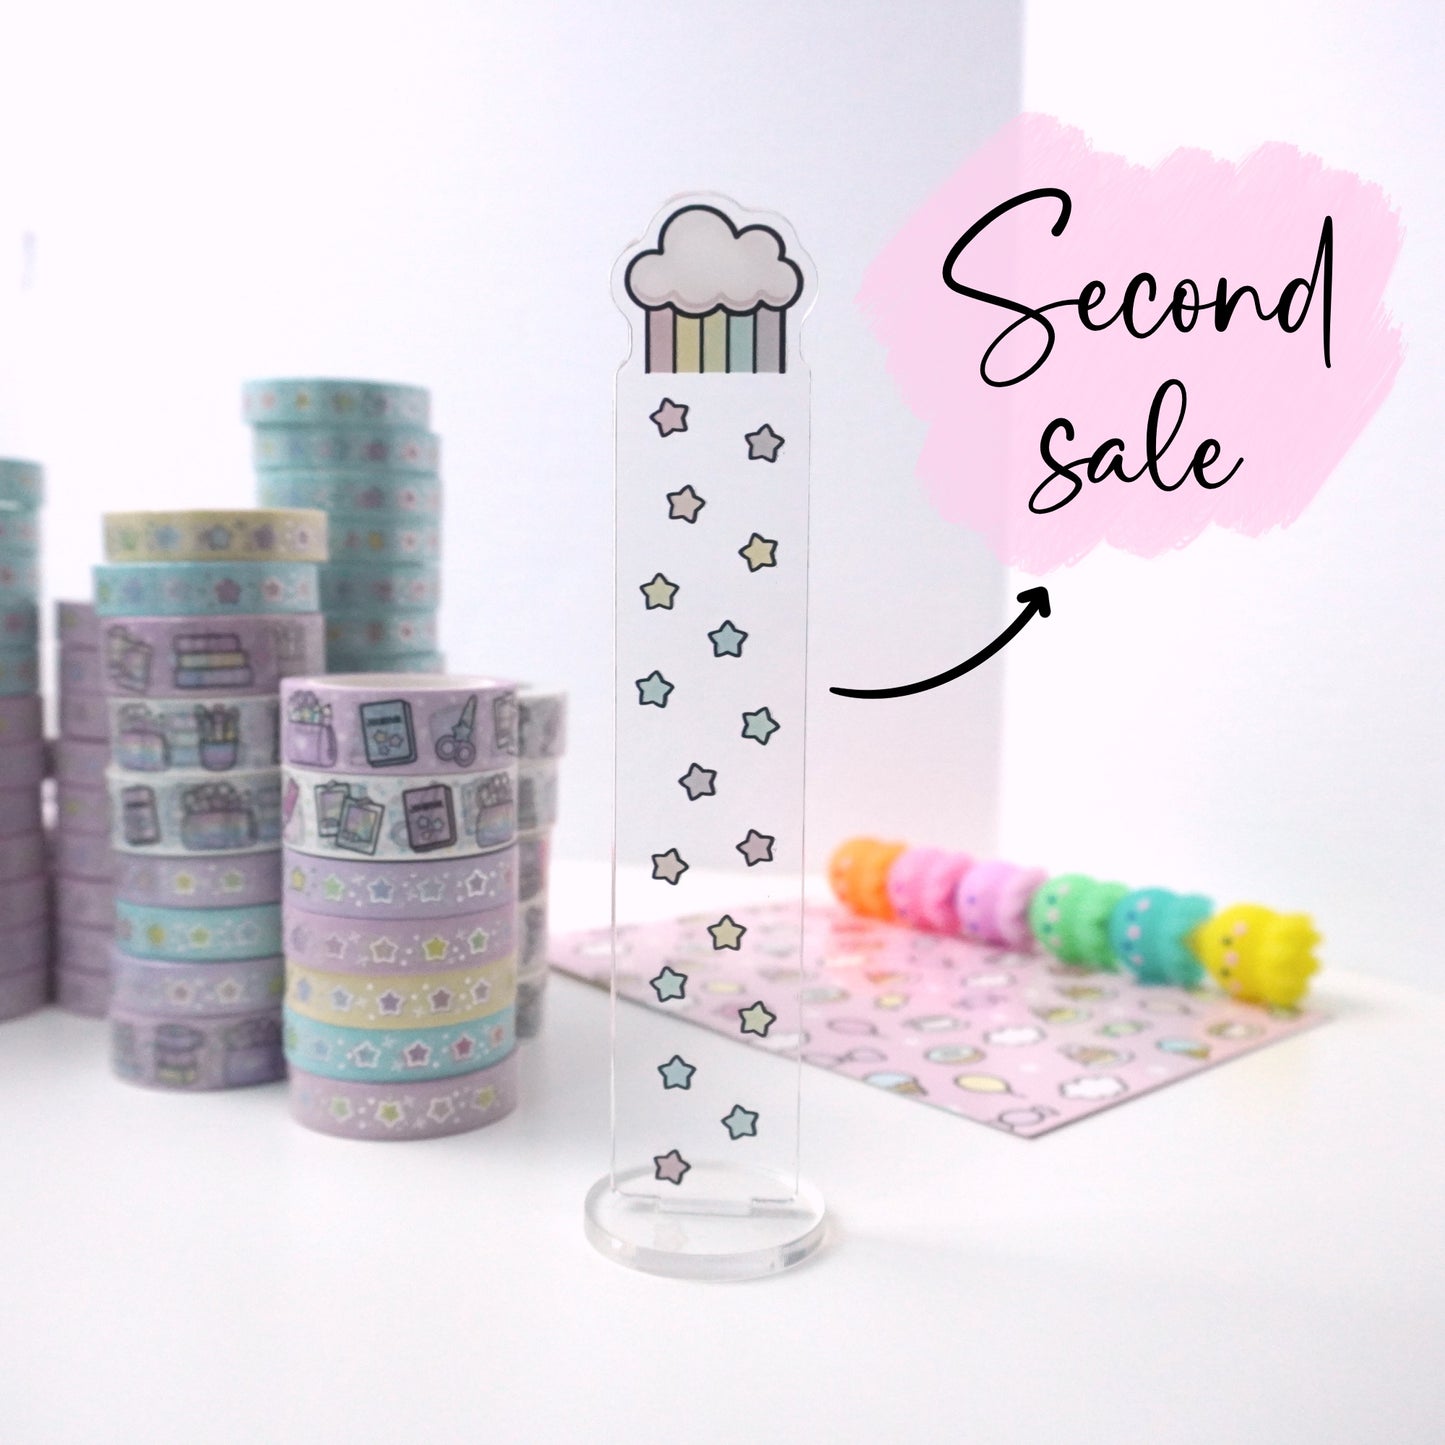 Second sale! | Raining rainbow | Acrylic Washi Stand